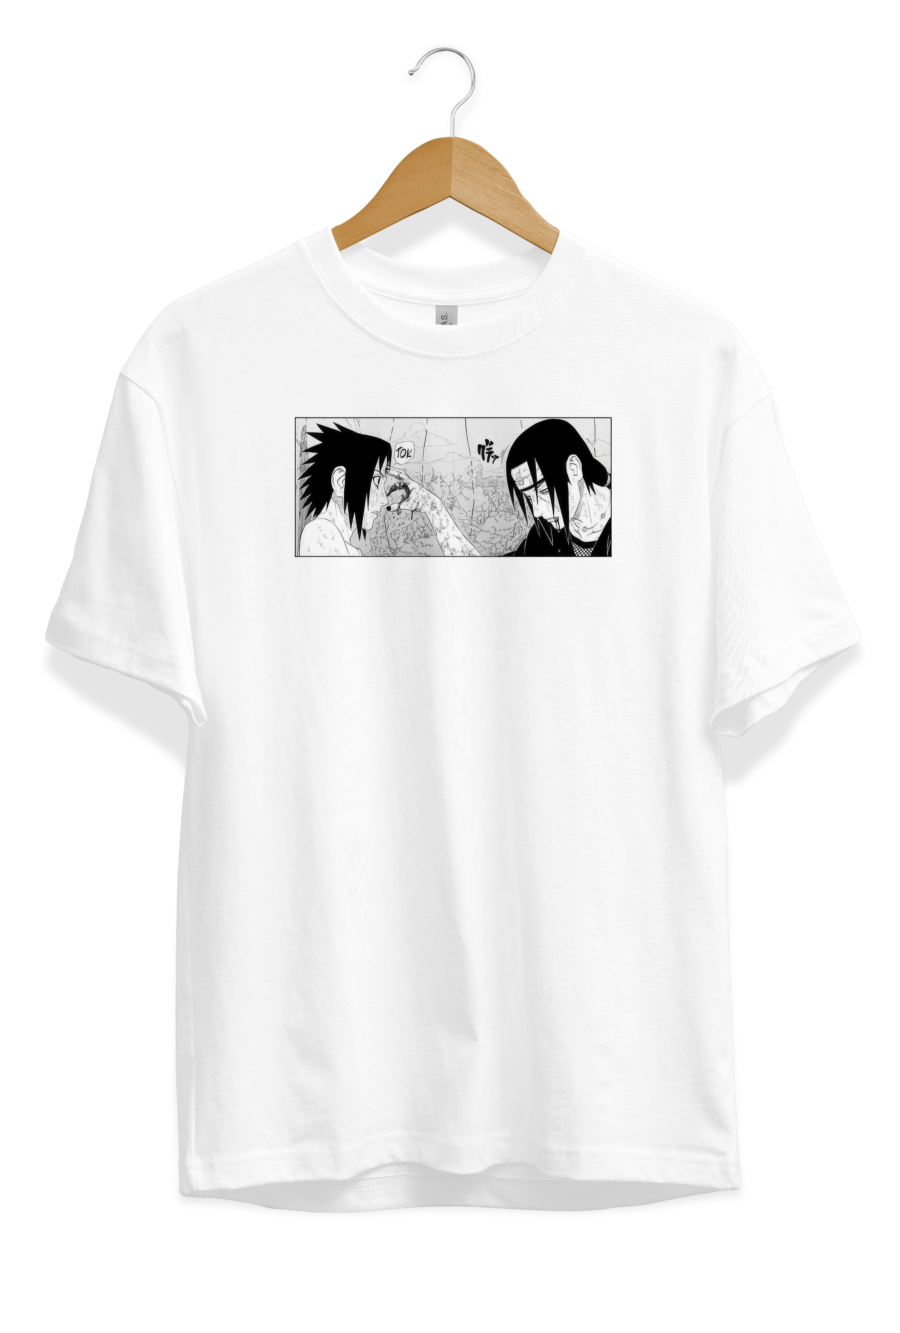 Sasuke vs Itachi Tok T-Shirt battle artwork t-shirt design